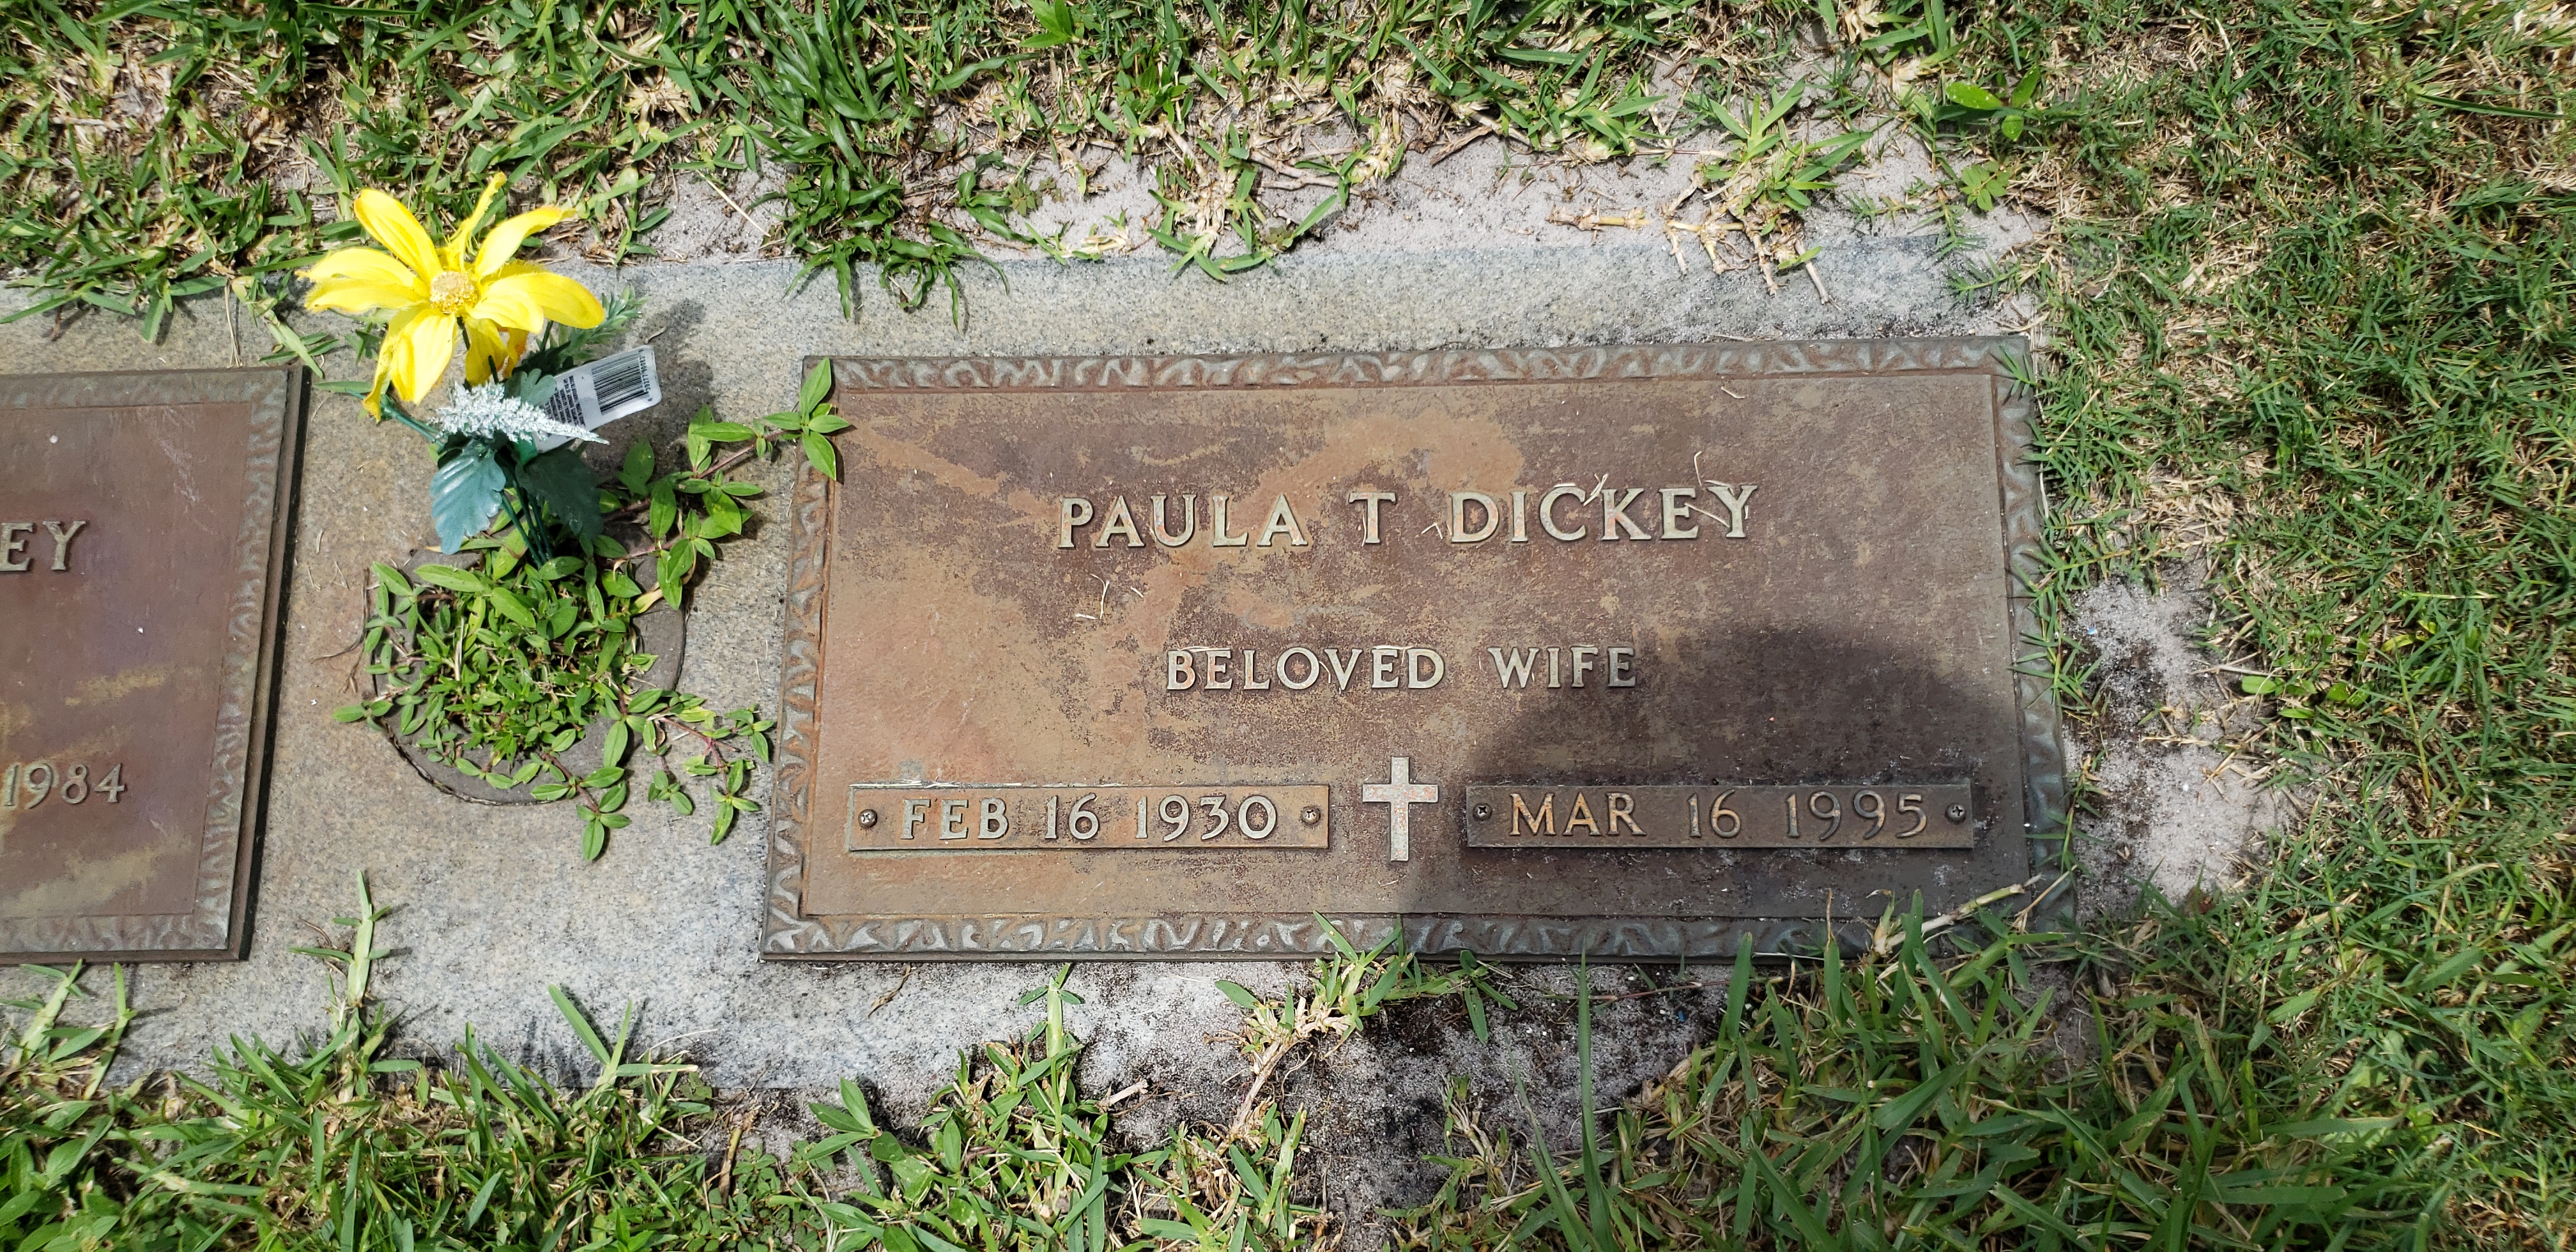 Paula T Dickey